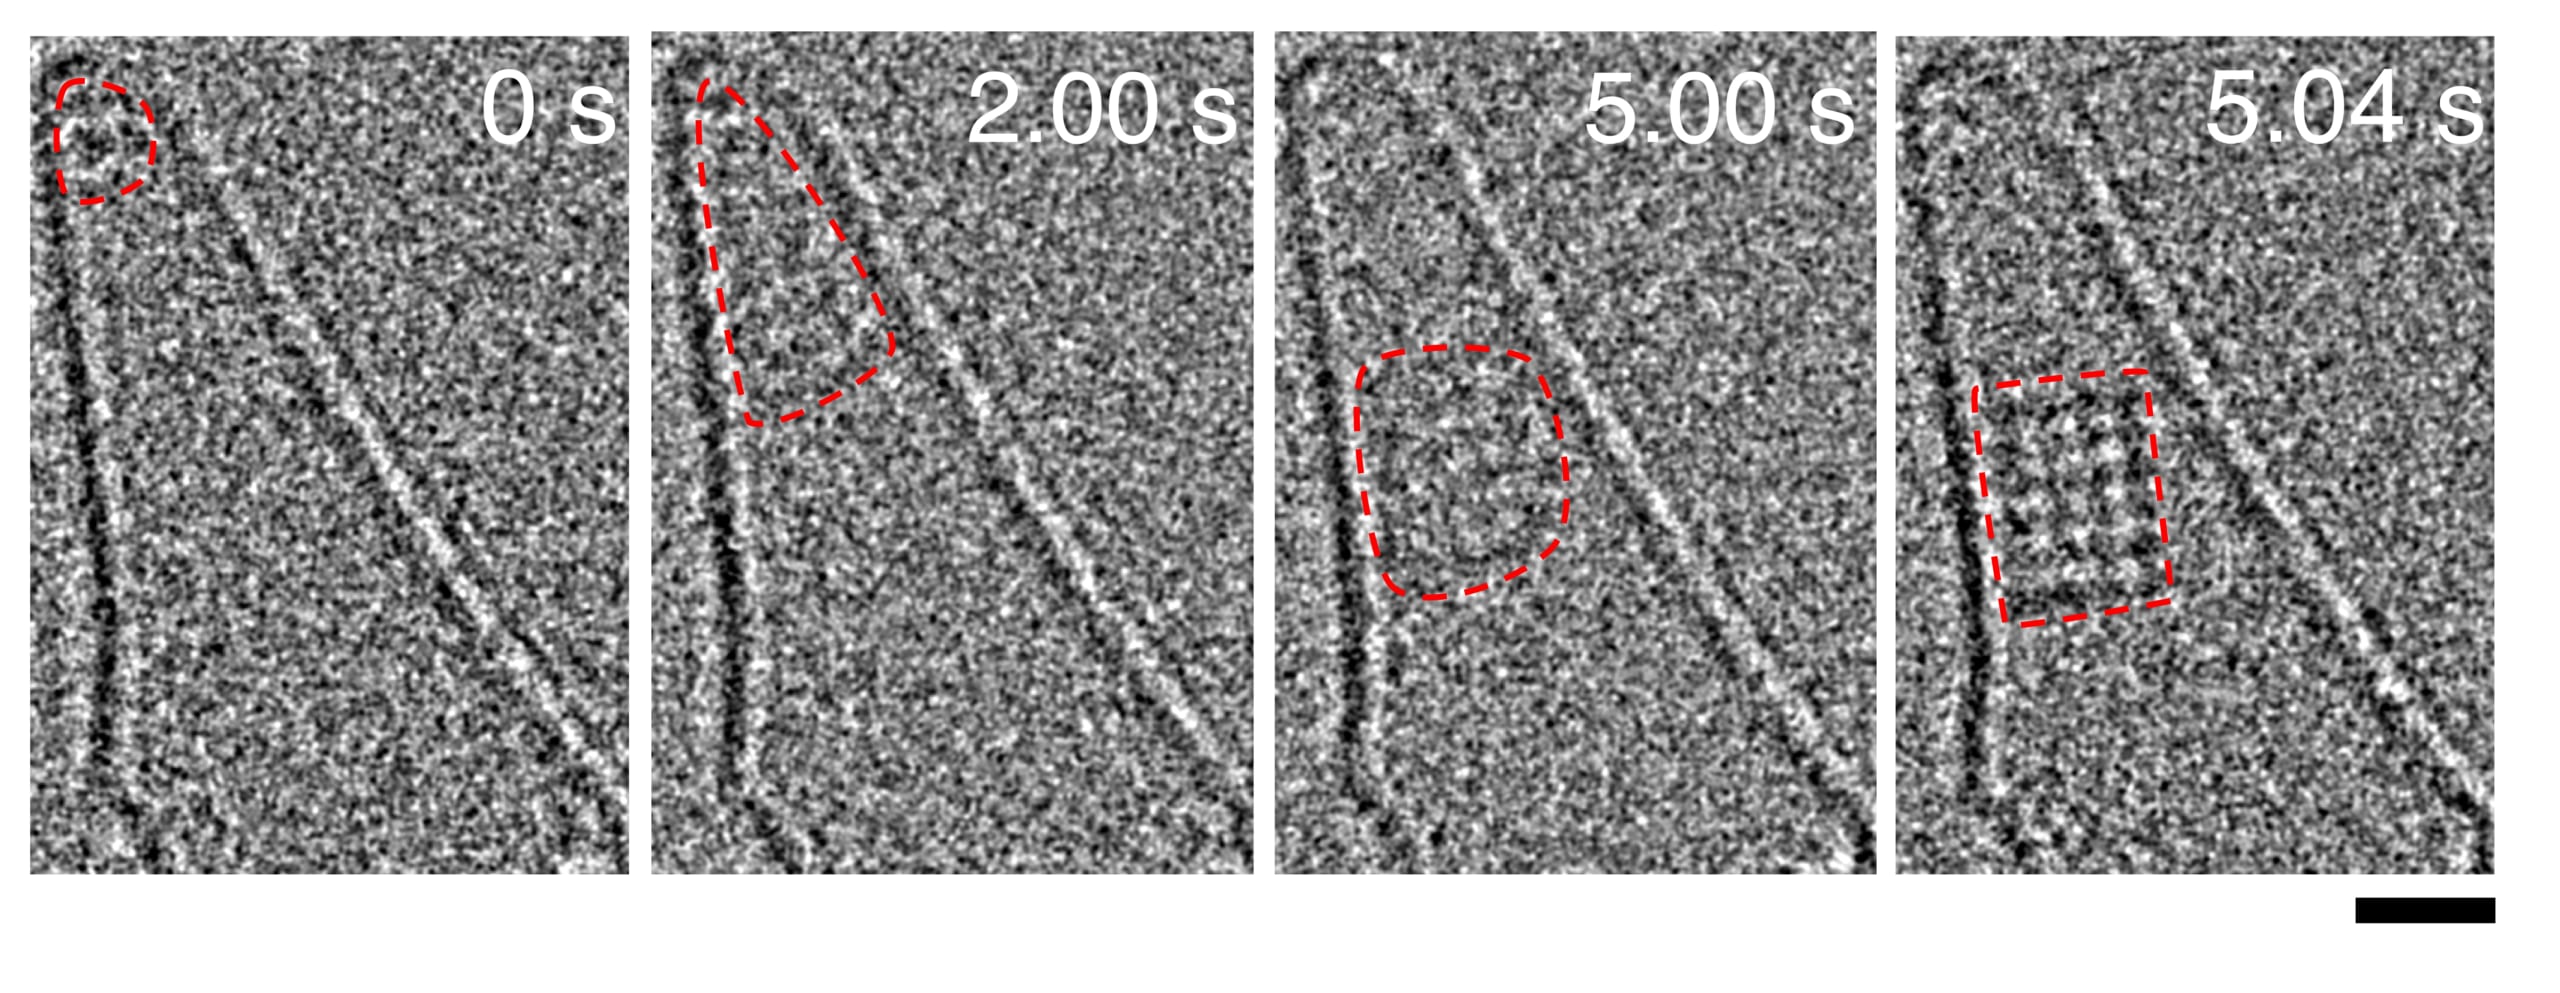 NaCl結晶核が形成される様子を捉えた原子分解能電子顕微鏡動画（40ミリ秒/フレーム）。